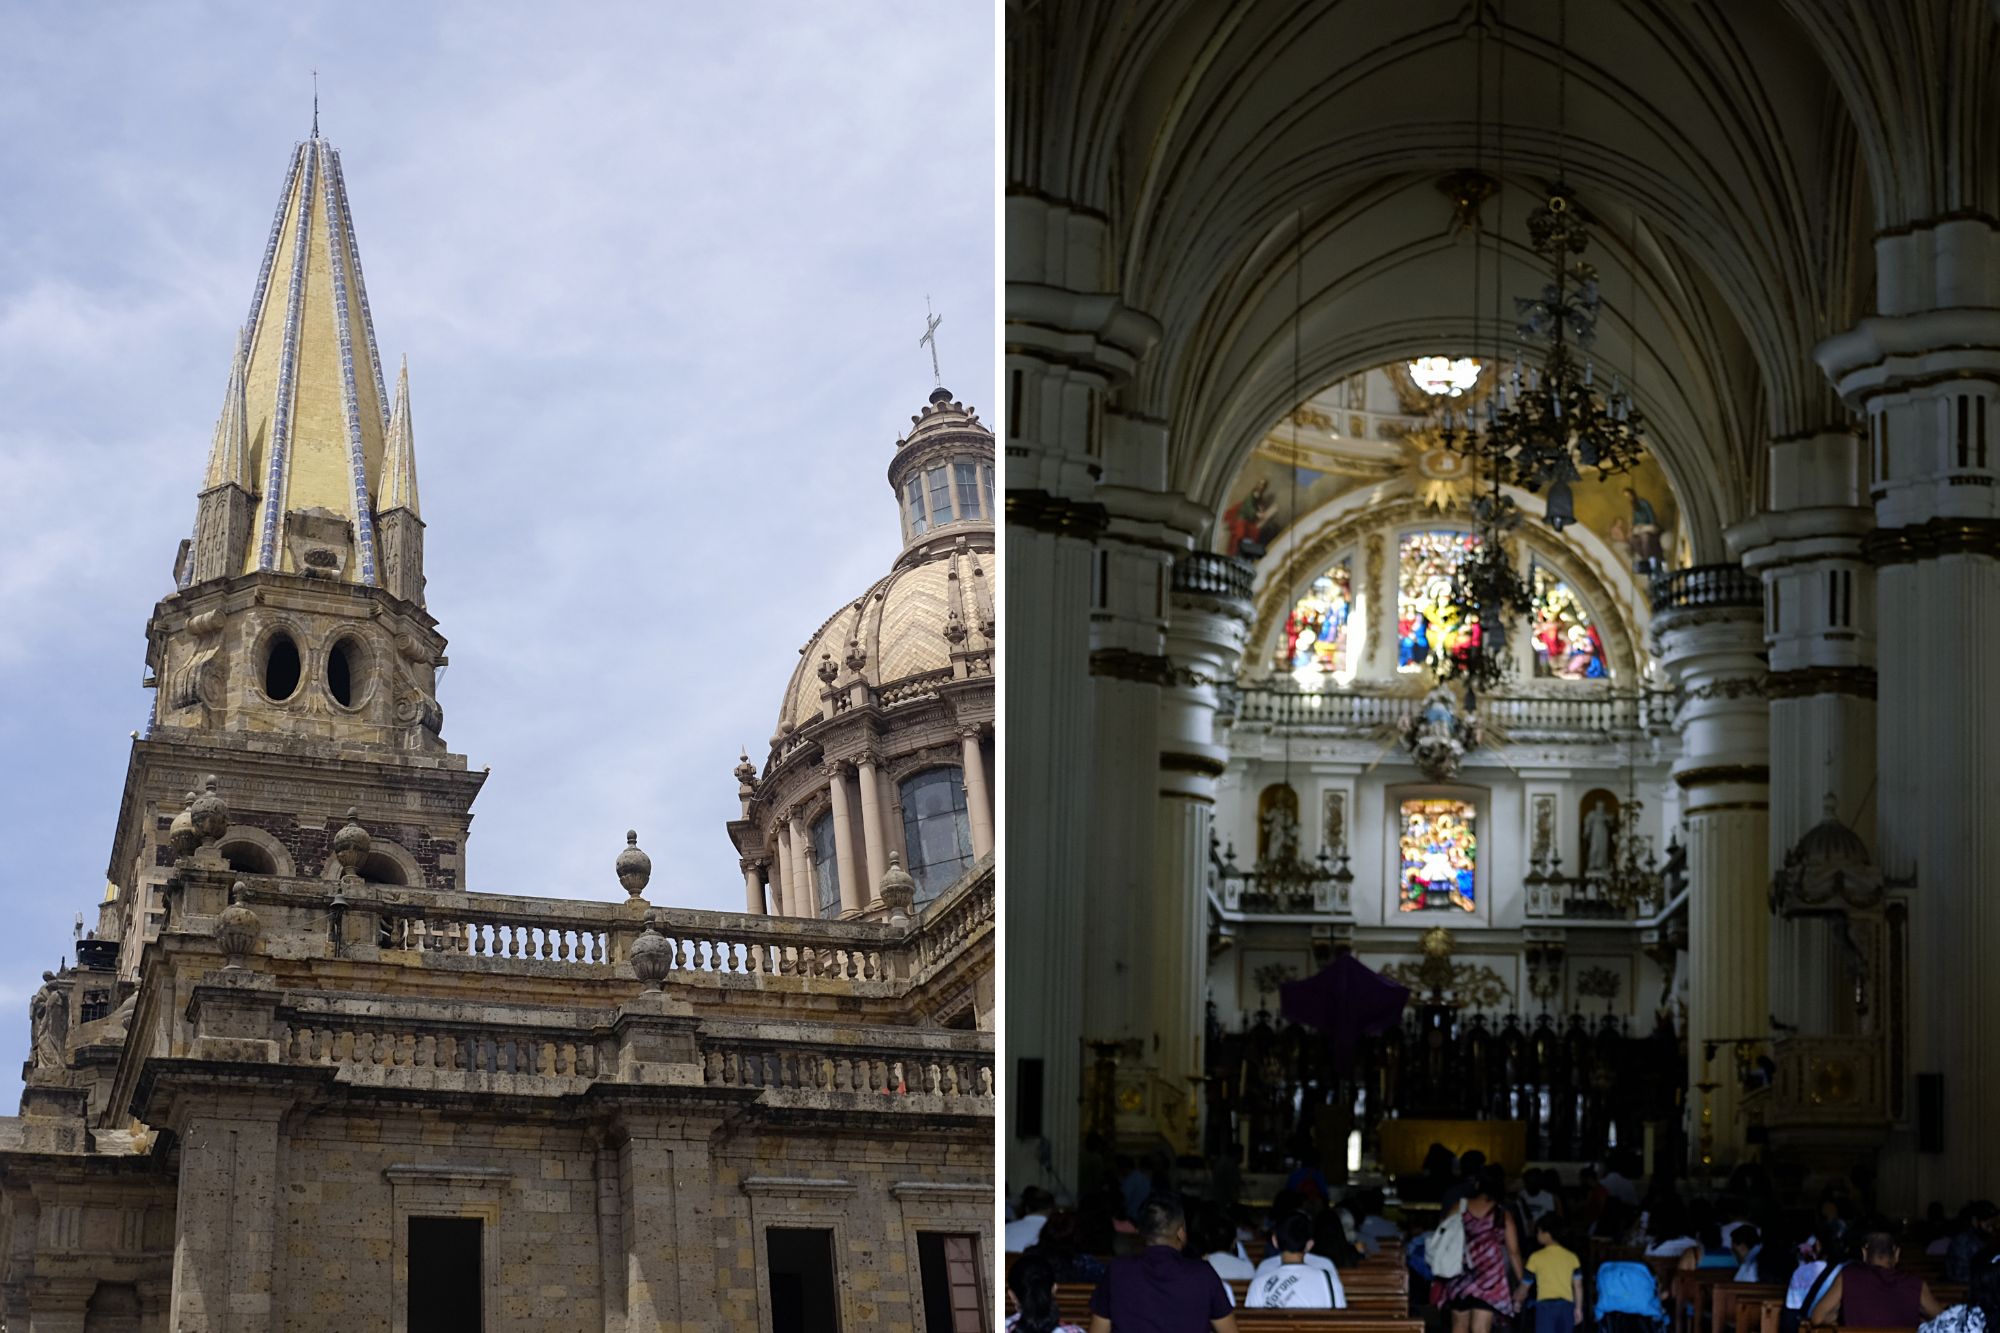 View of the exterior and interior of Catedral de Guadalajara